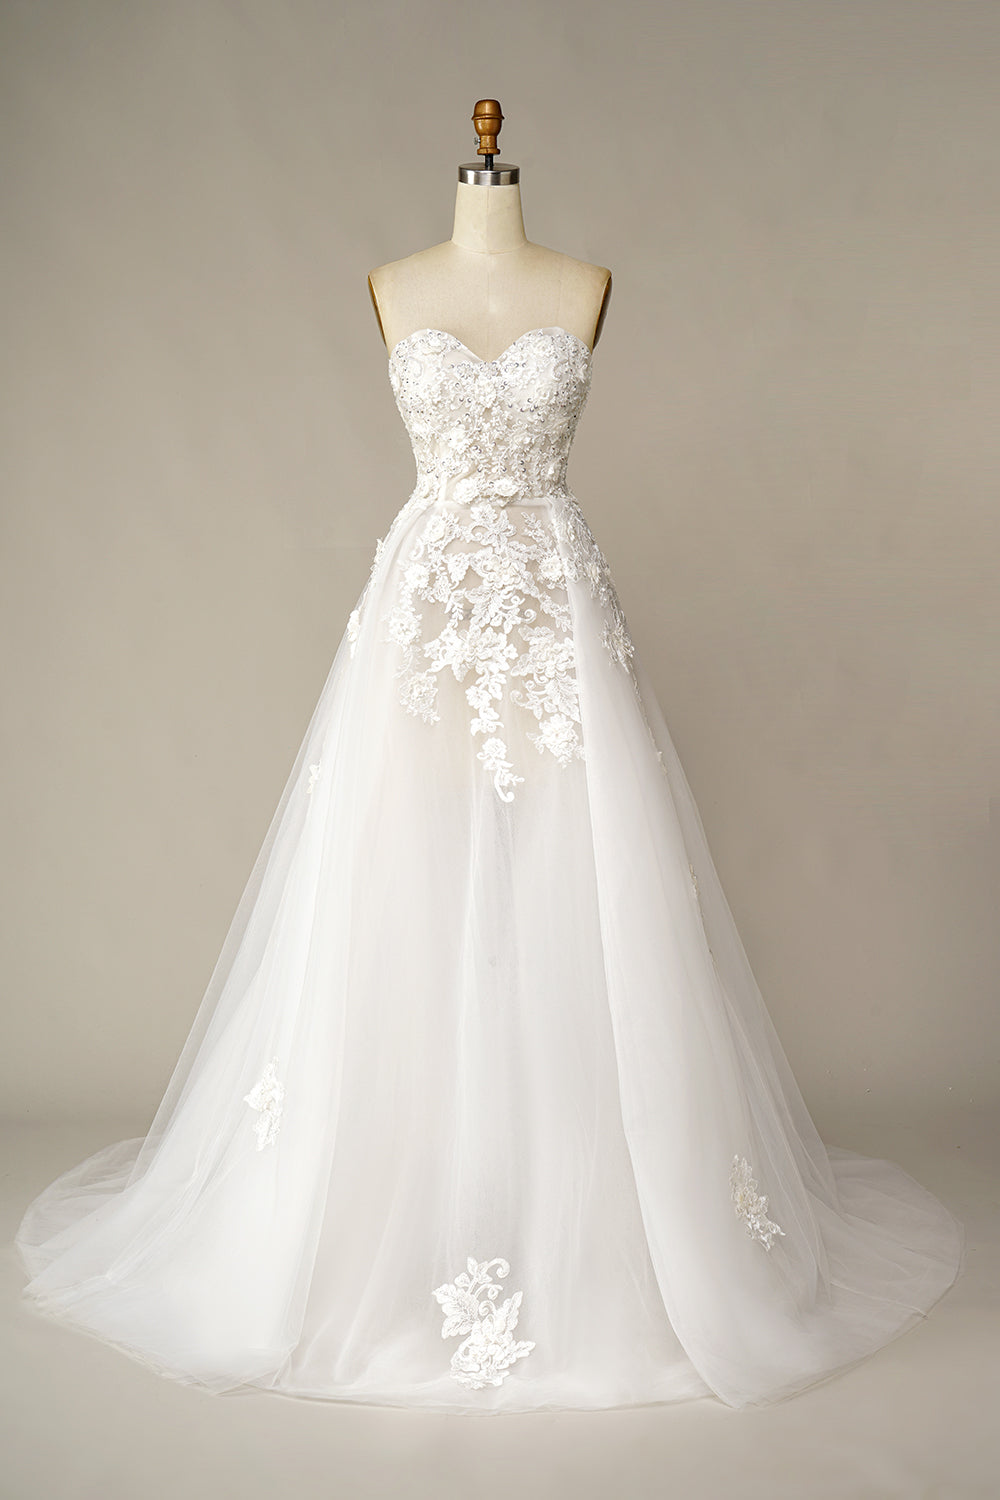 Wedding Dress Ballgown, A Line Wedding Dress with Appliques